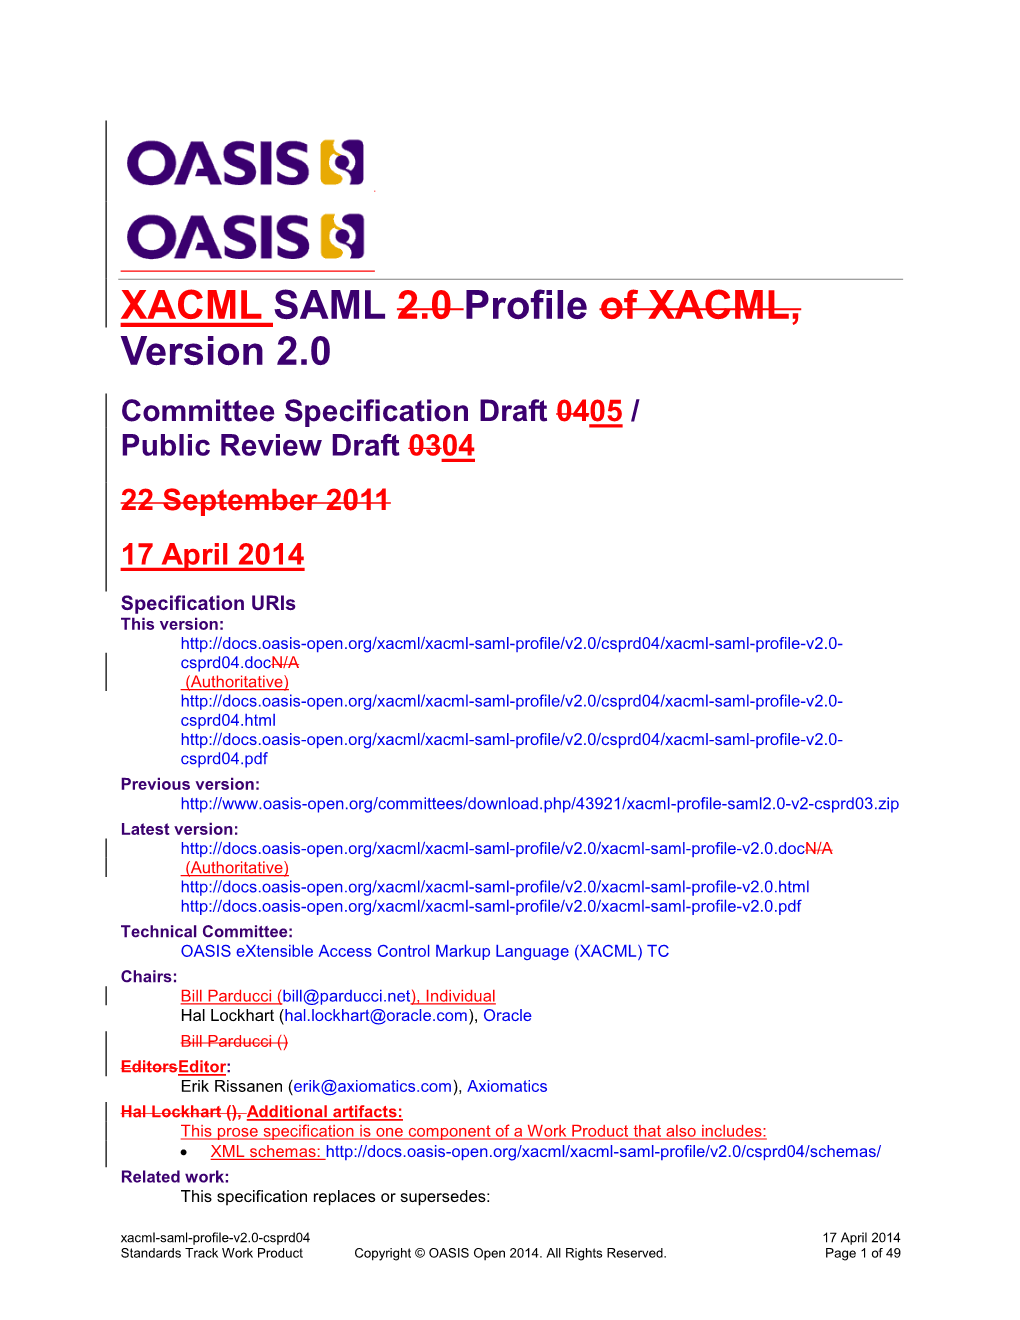 XACML SAML Profile Version